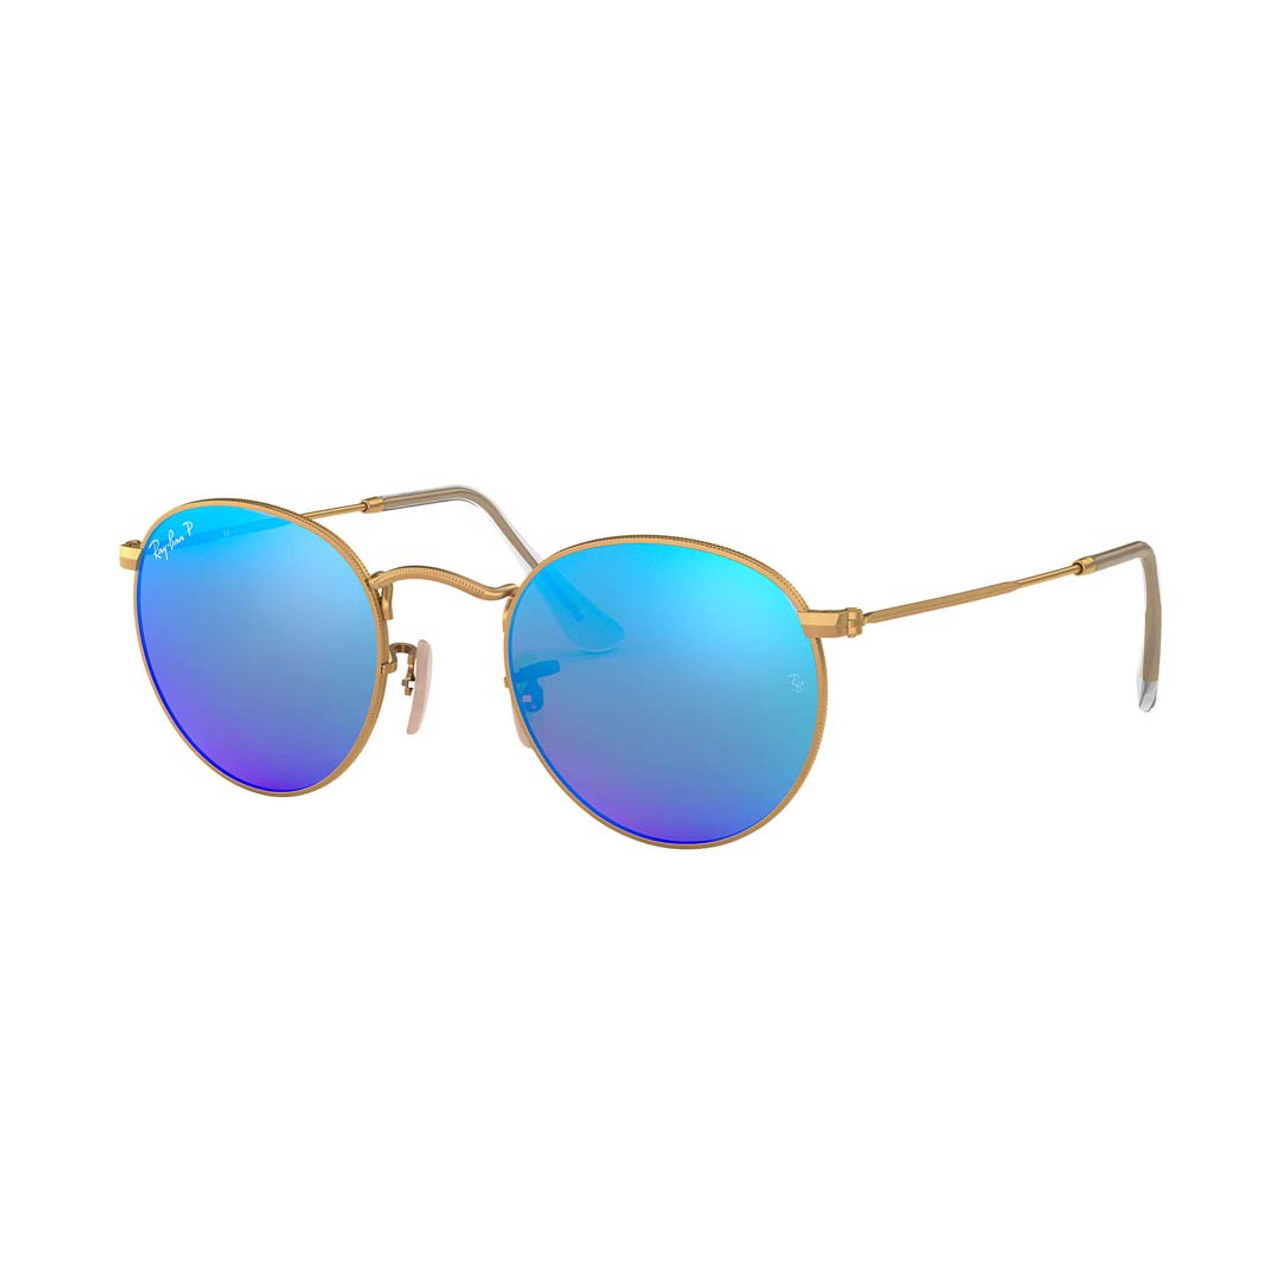 Ray-Ban Ray-Ban Round Flash Lenses Polarized Sunglasses - Gold/Blue $ 213 |  TYLER'S